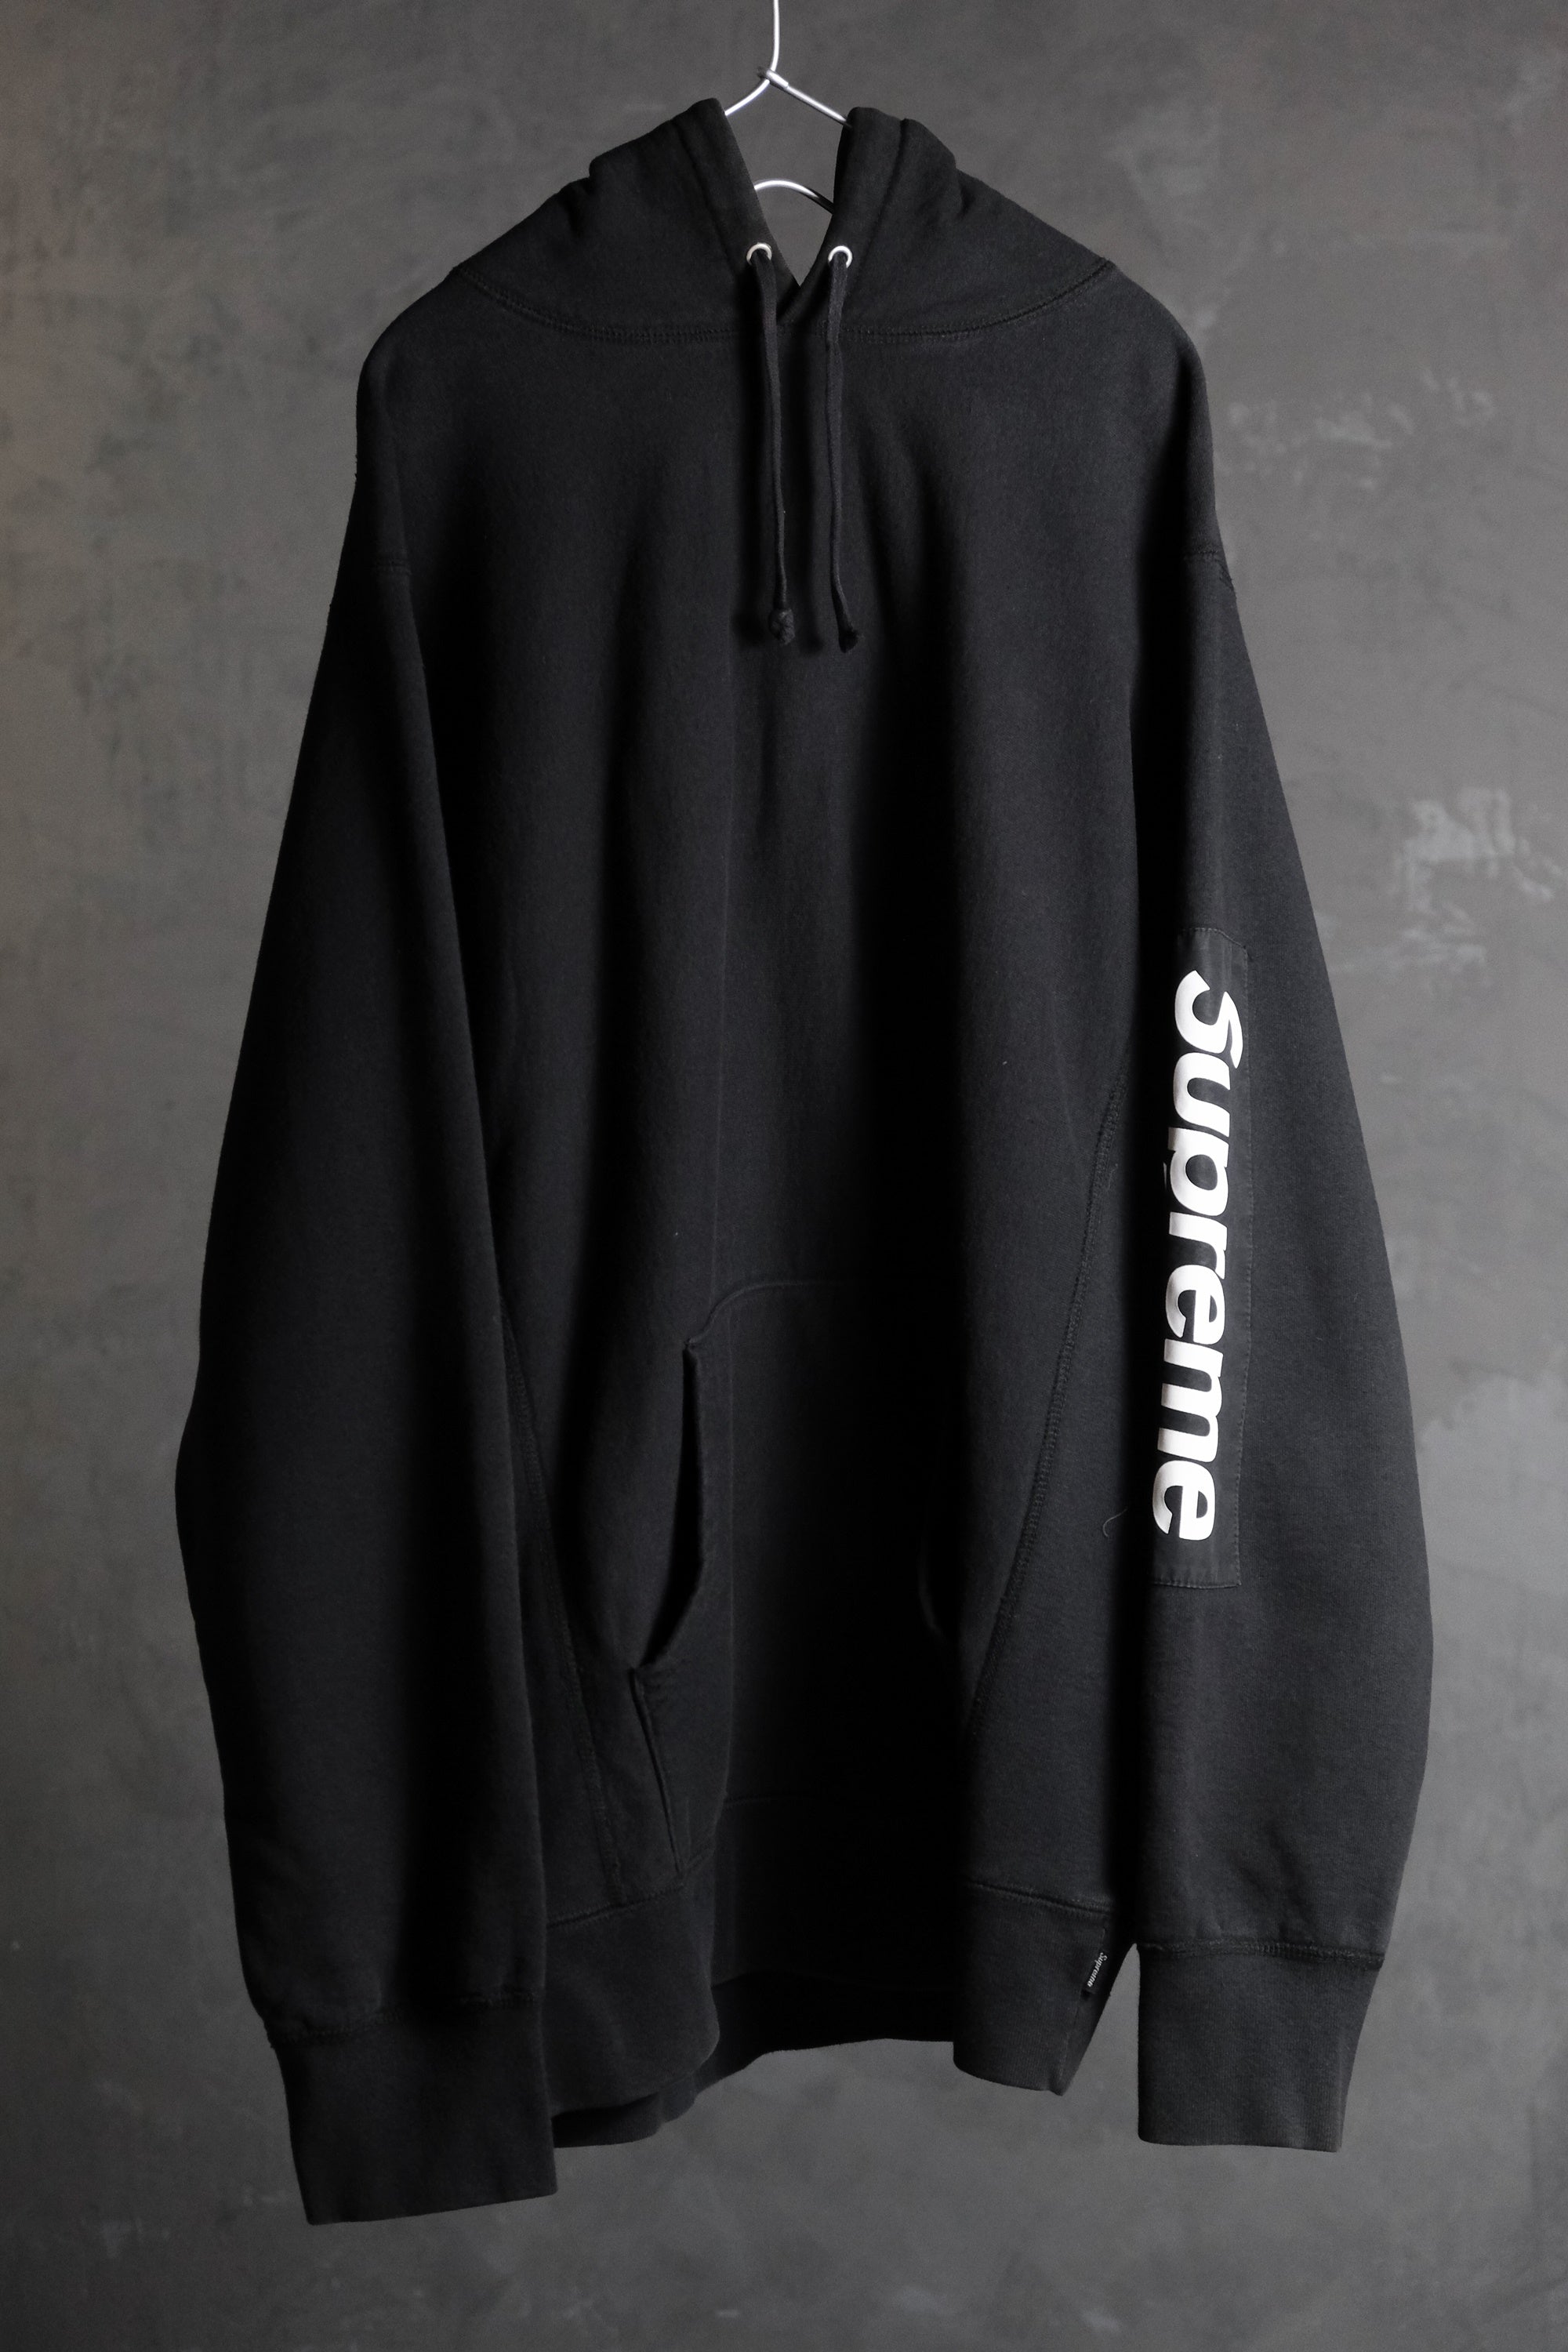 Supreme 17S/S Sleeve Patch Hooded Sweatshirt 手袖Logo帽T